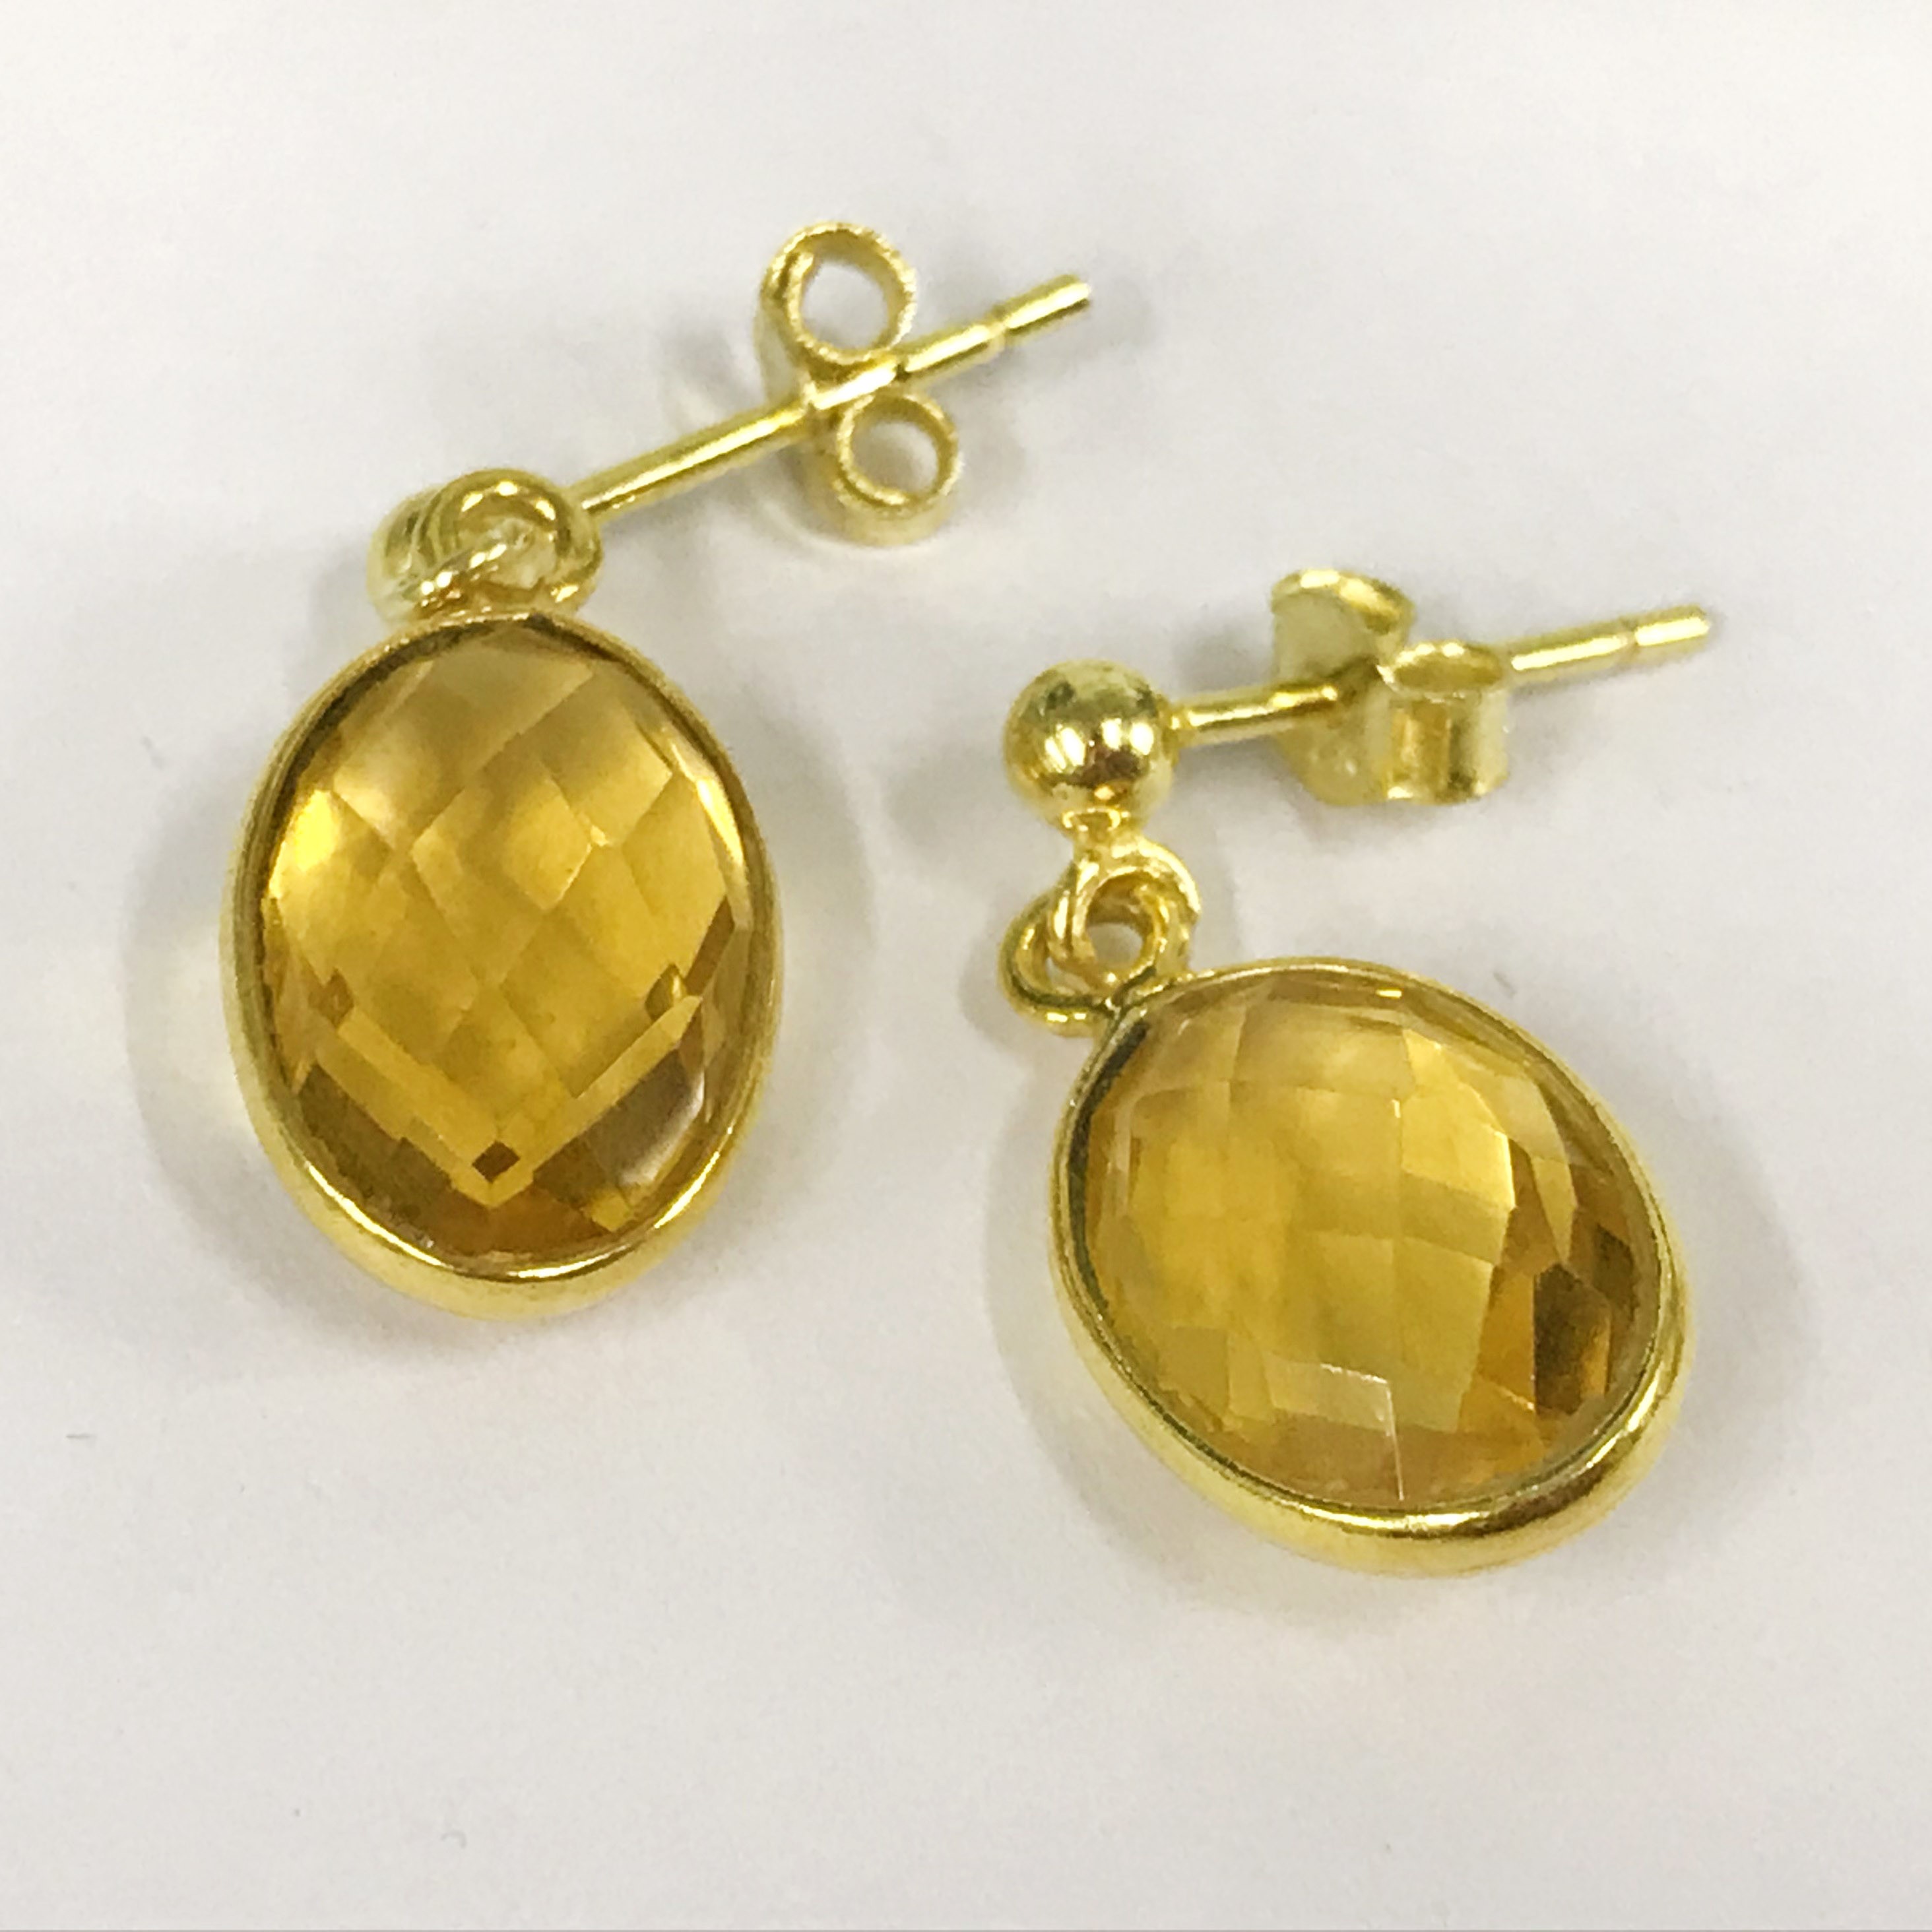 X5 Pairs of earrings 14k gilt Citren gemstone stud - Image 4 of 4